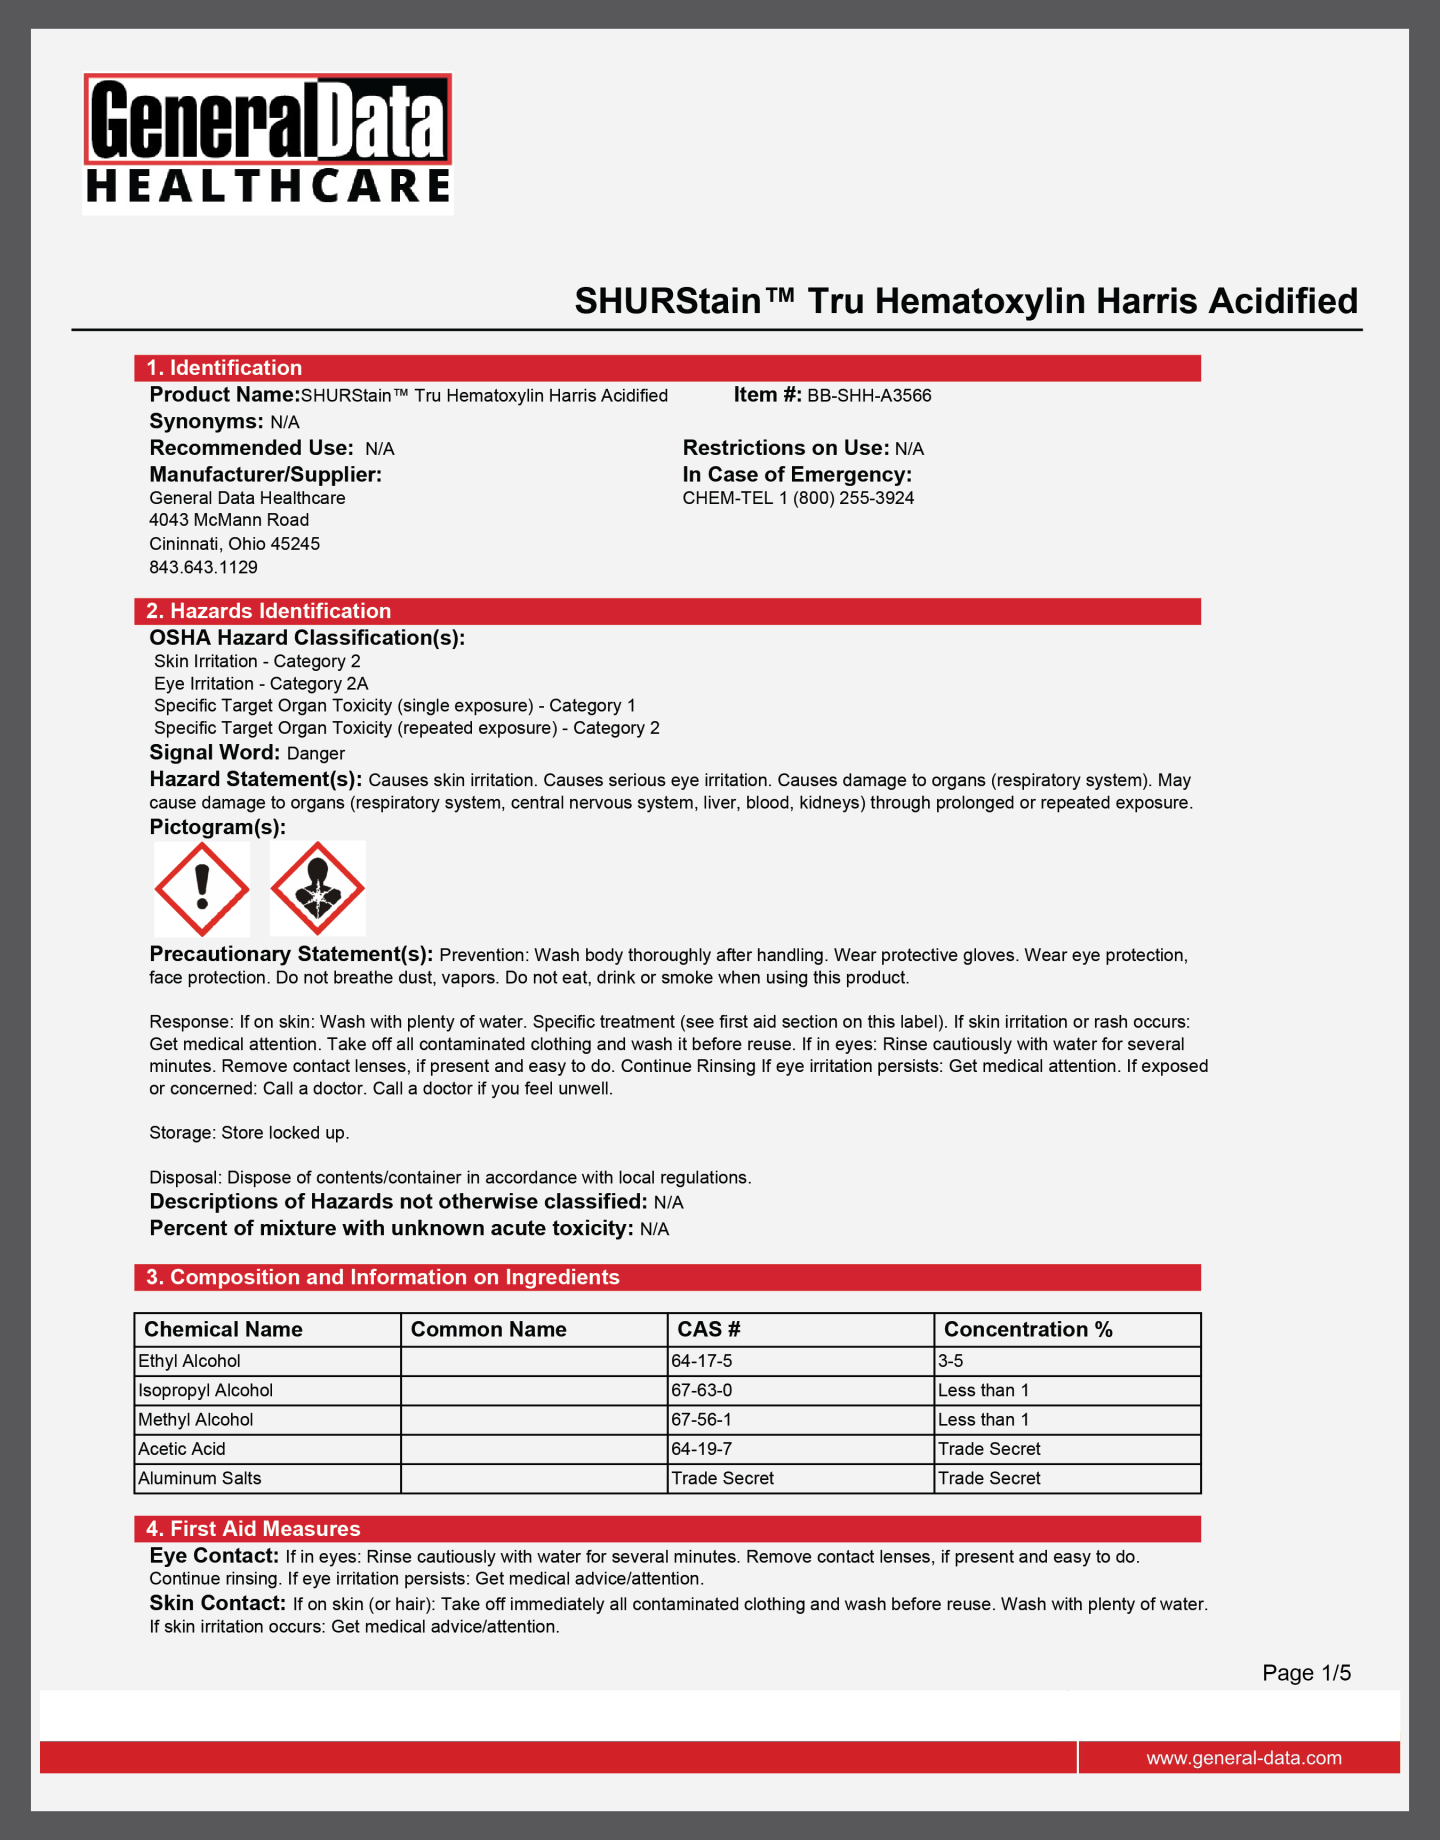 SHURStain Tru Hematoxylin Harris Acidified Safety Data Sheet 